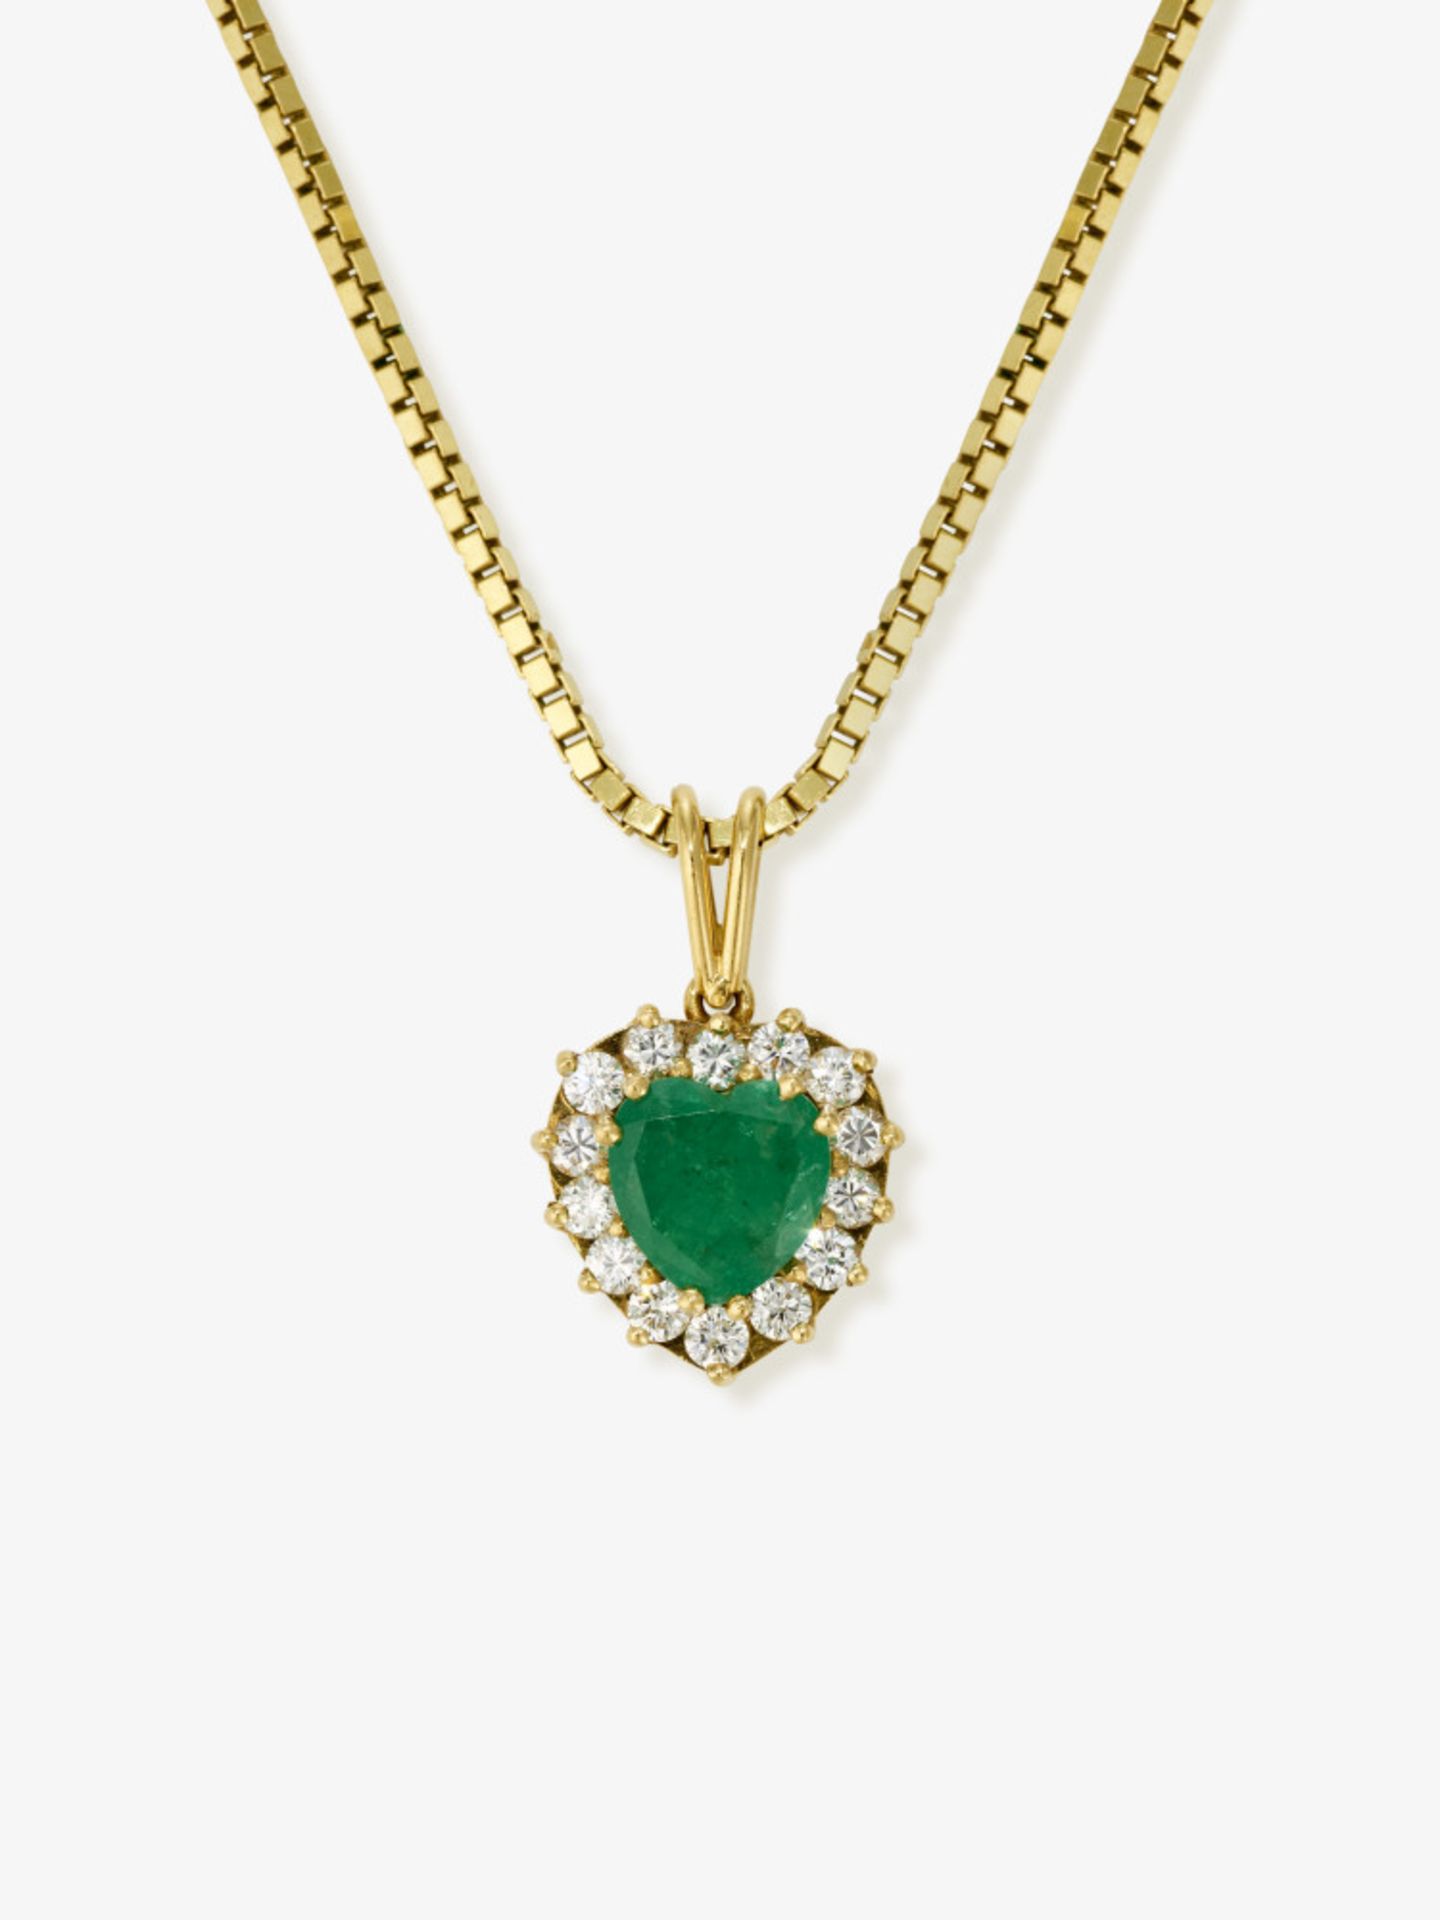 An emerald and brilliant-cut diamond pendant with a fine Venetian necklace